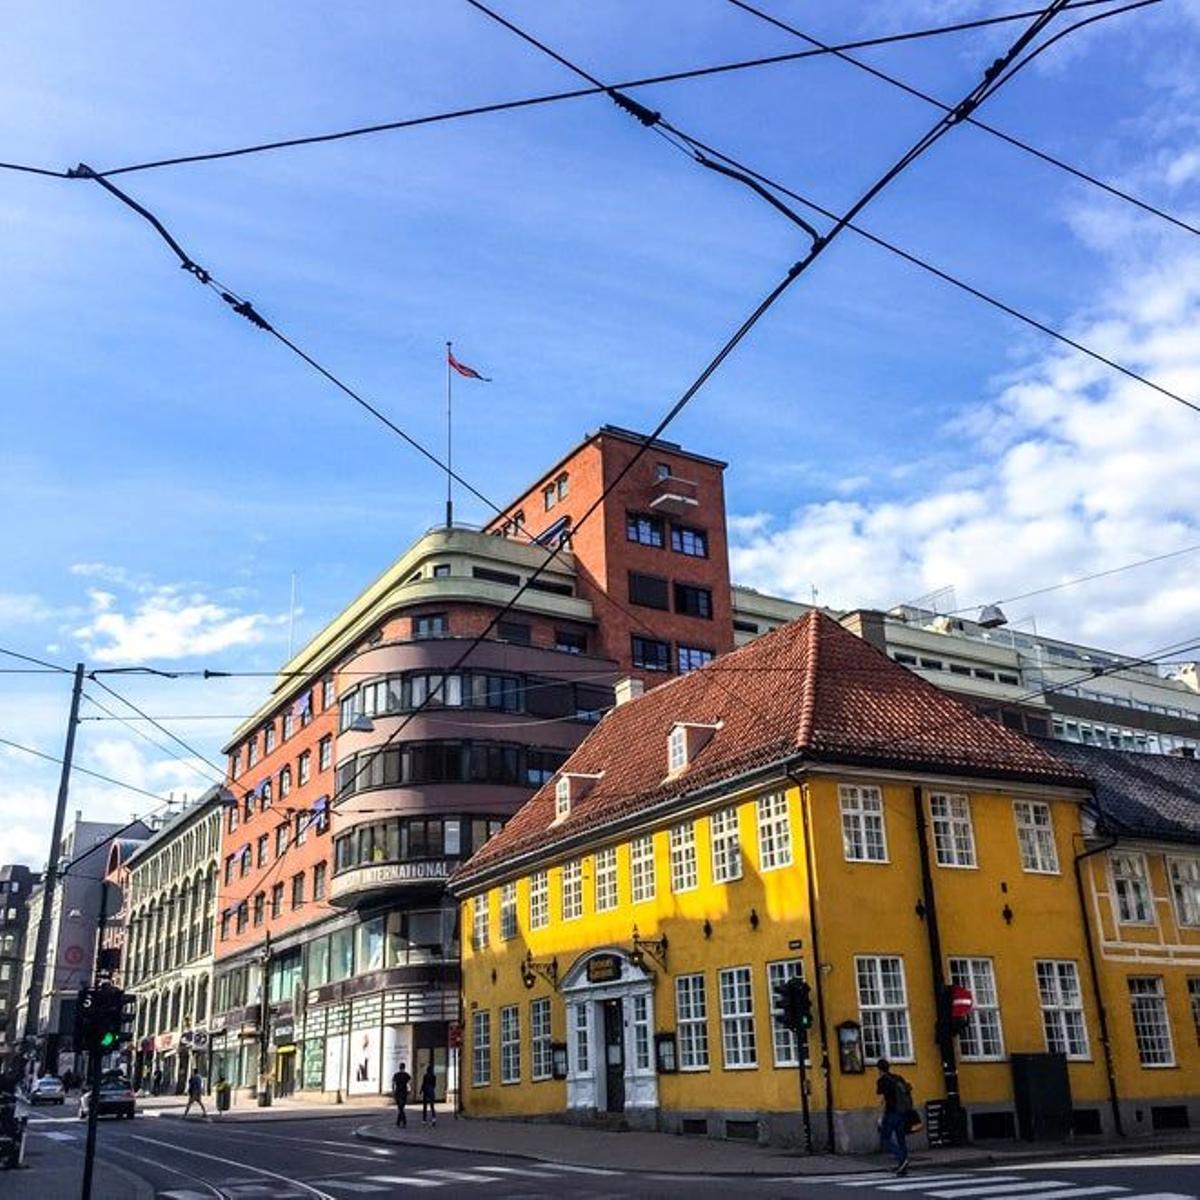 Calles del centro de Oslo.